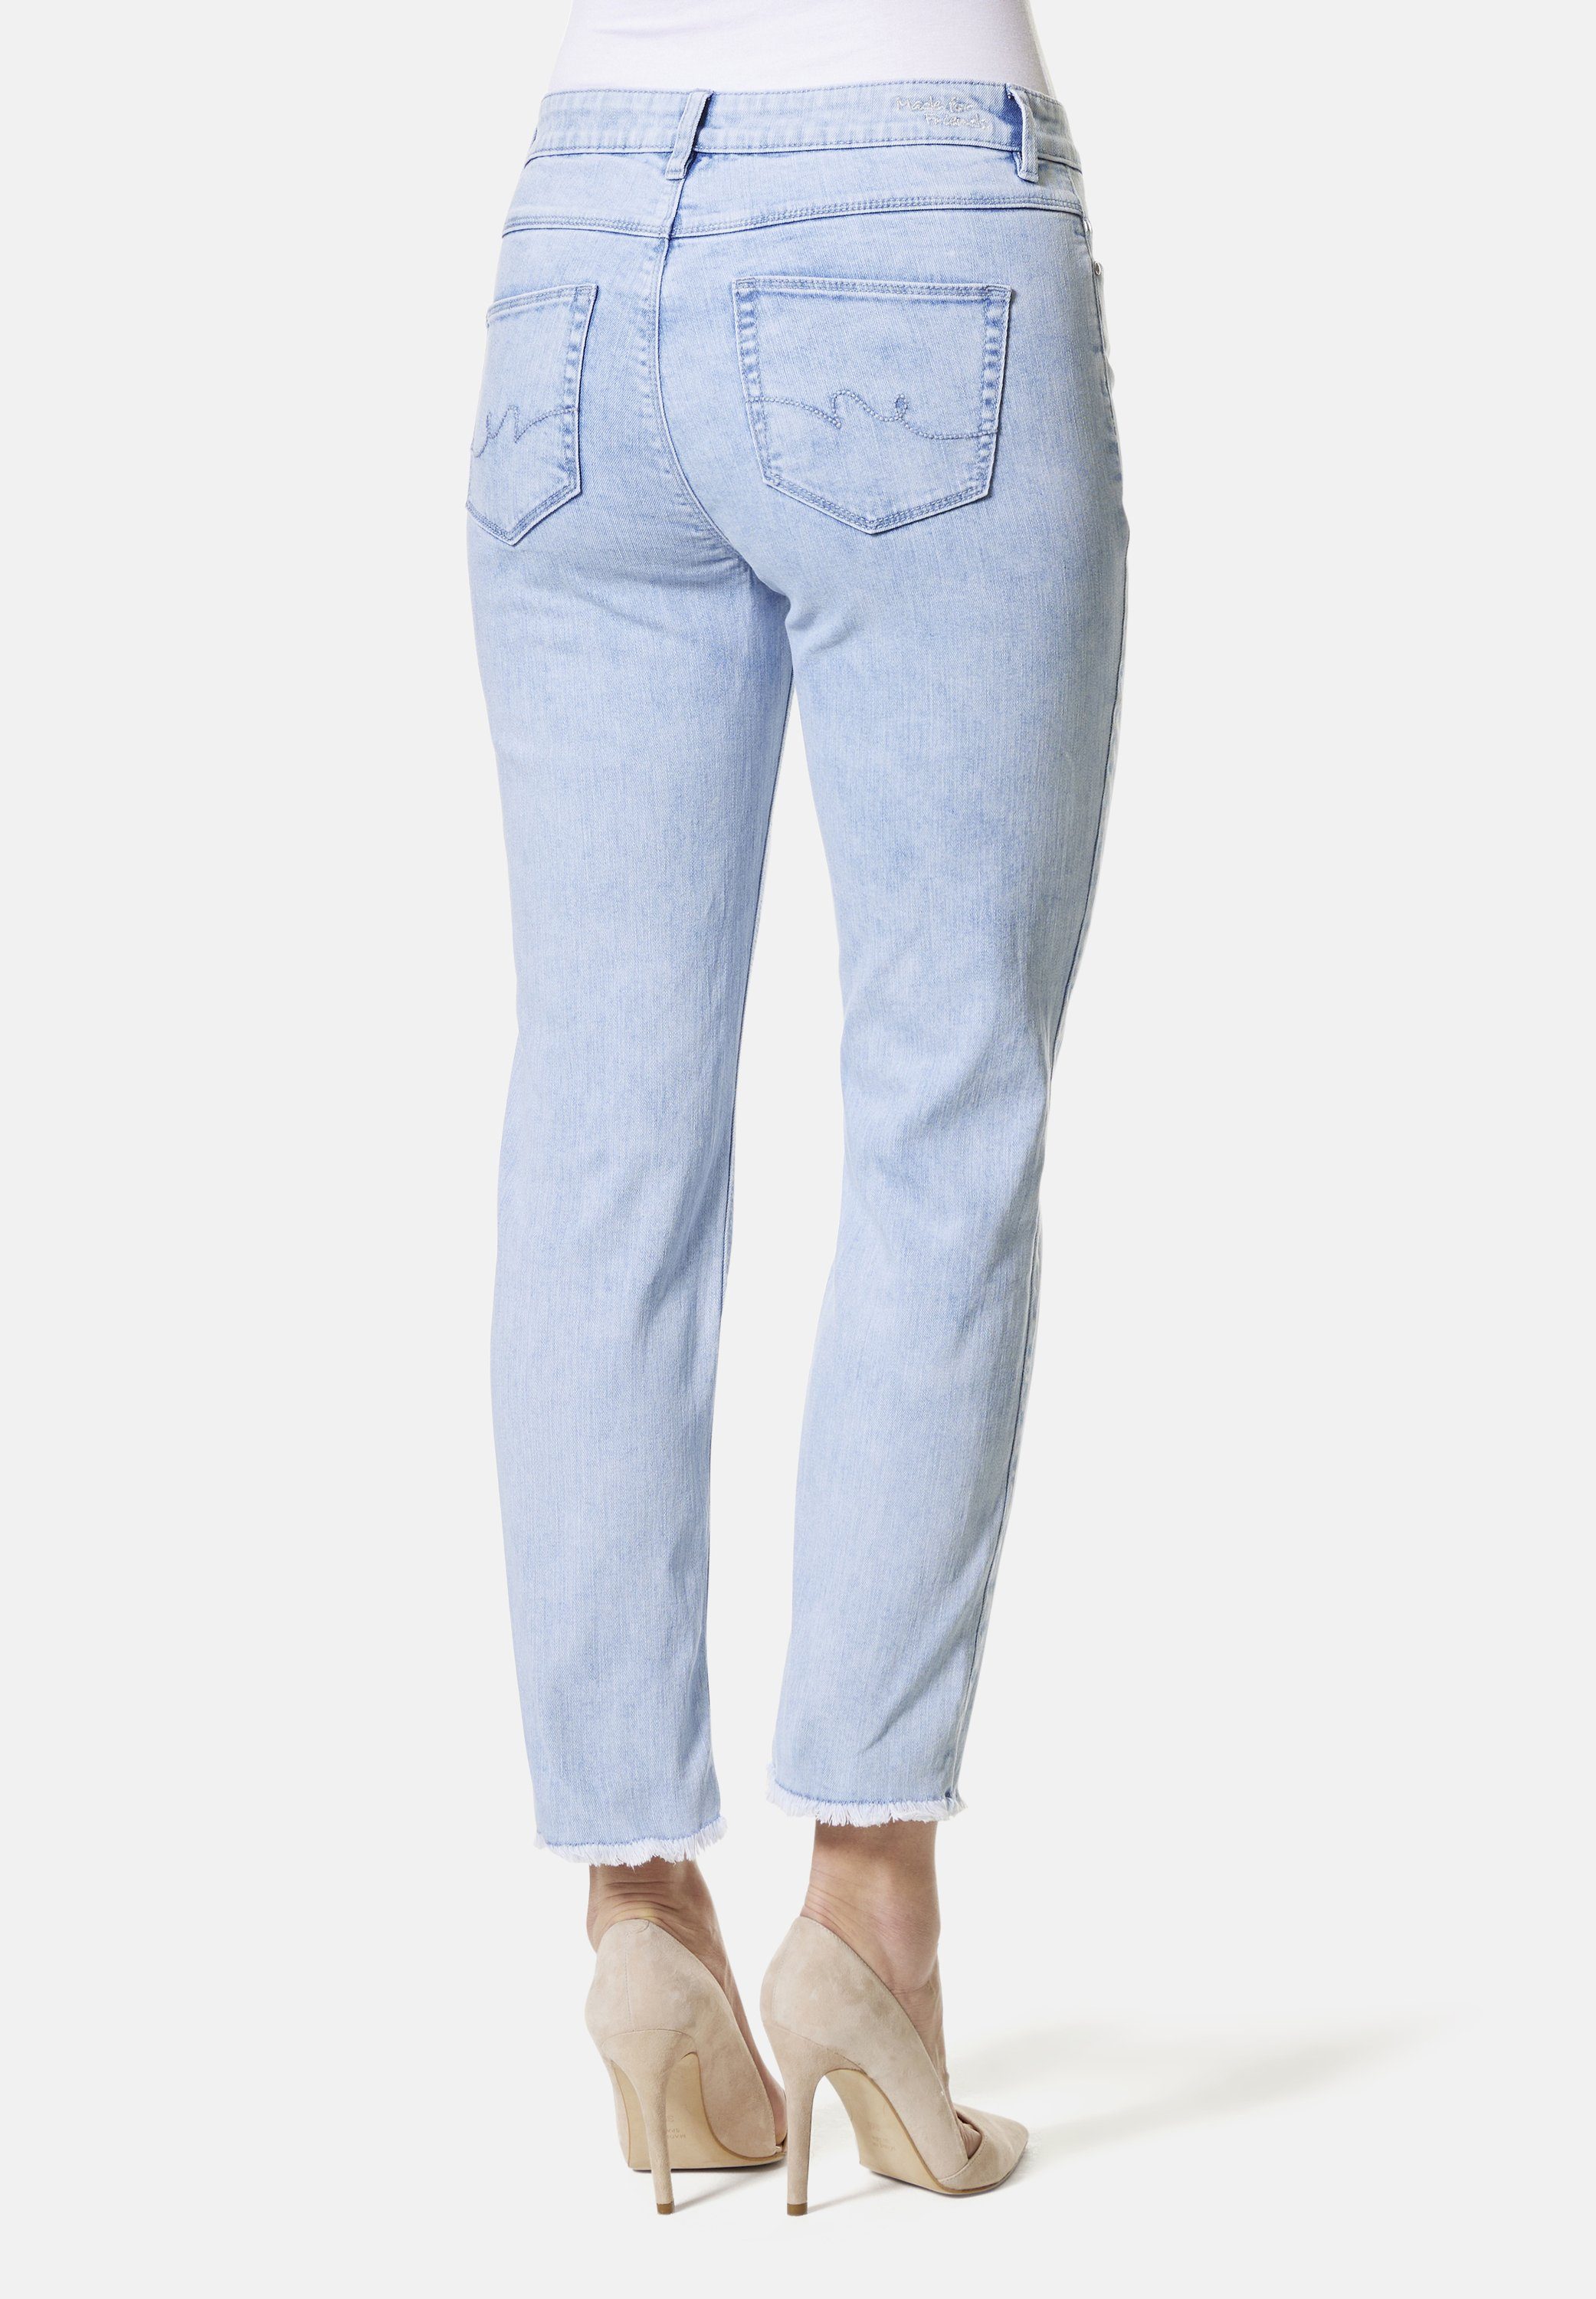 STOOKER WOMEN 5-Pocket-Jeans Zermatt Fit acid Fashion light blue Straight